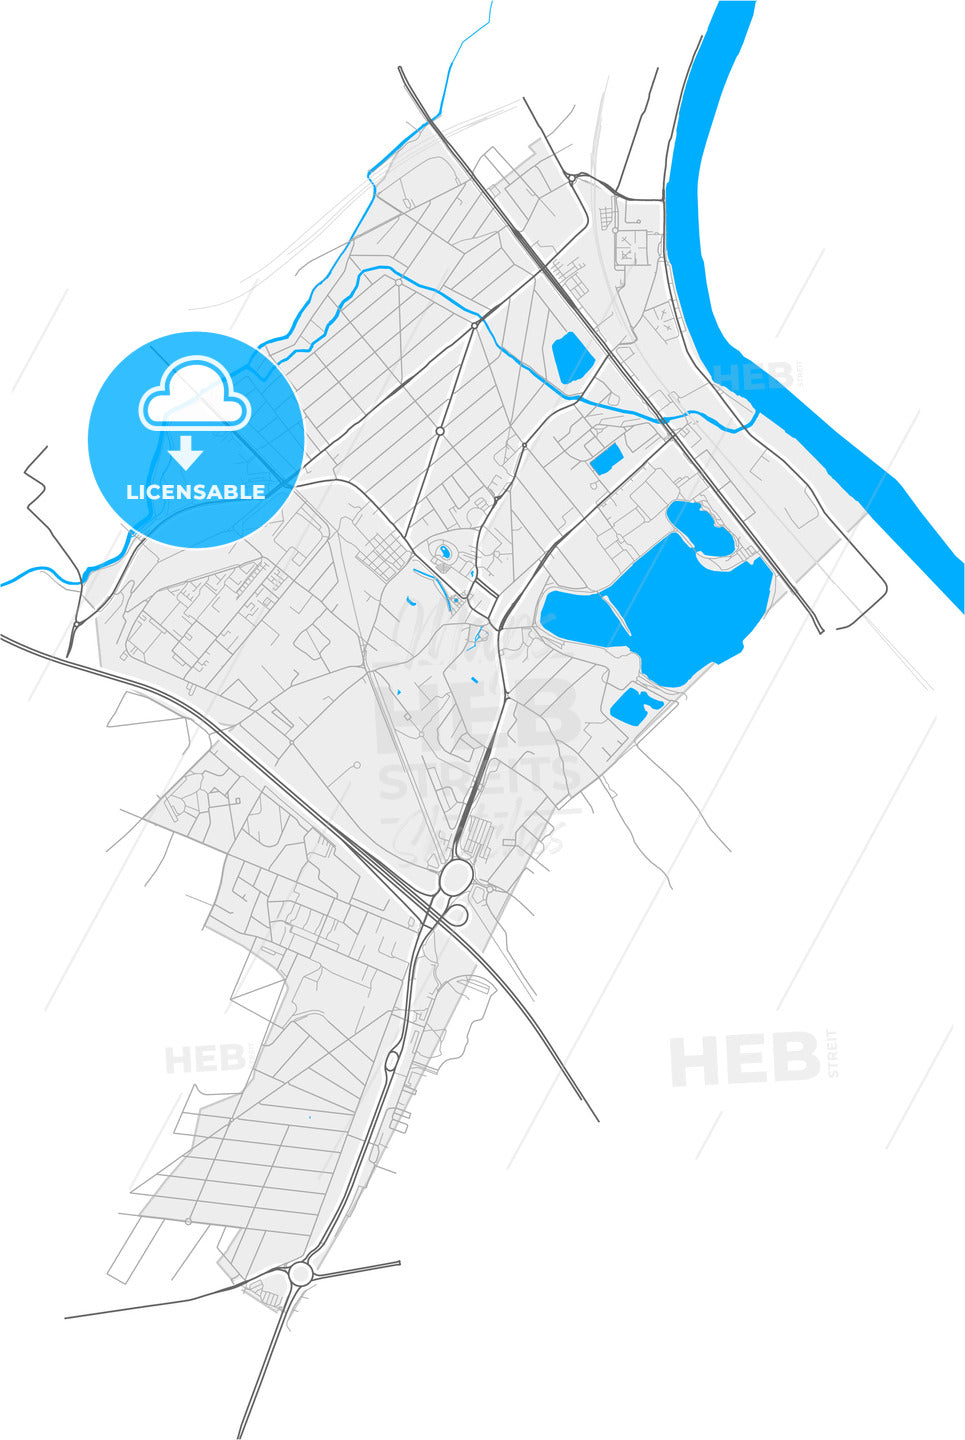 Viry-Châtillon, Essonne, France, high quality vector map